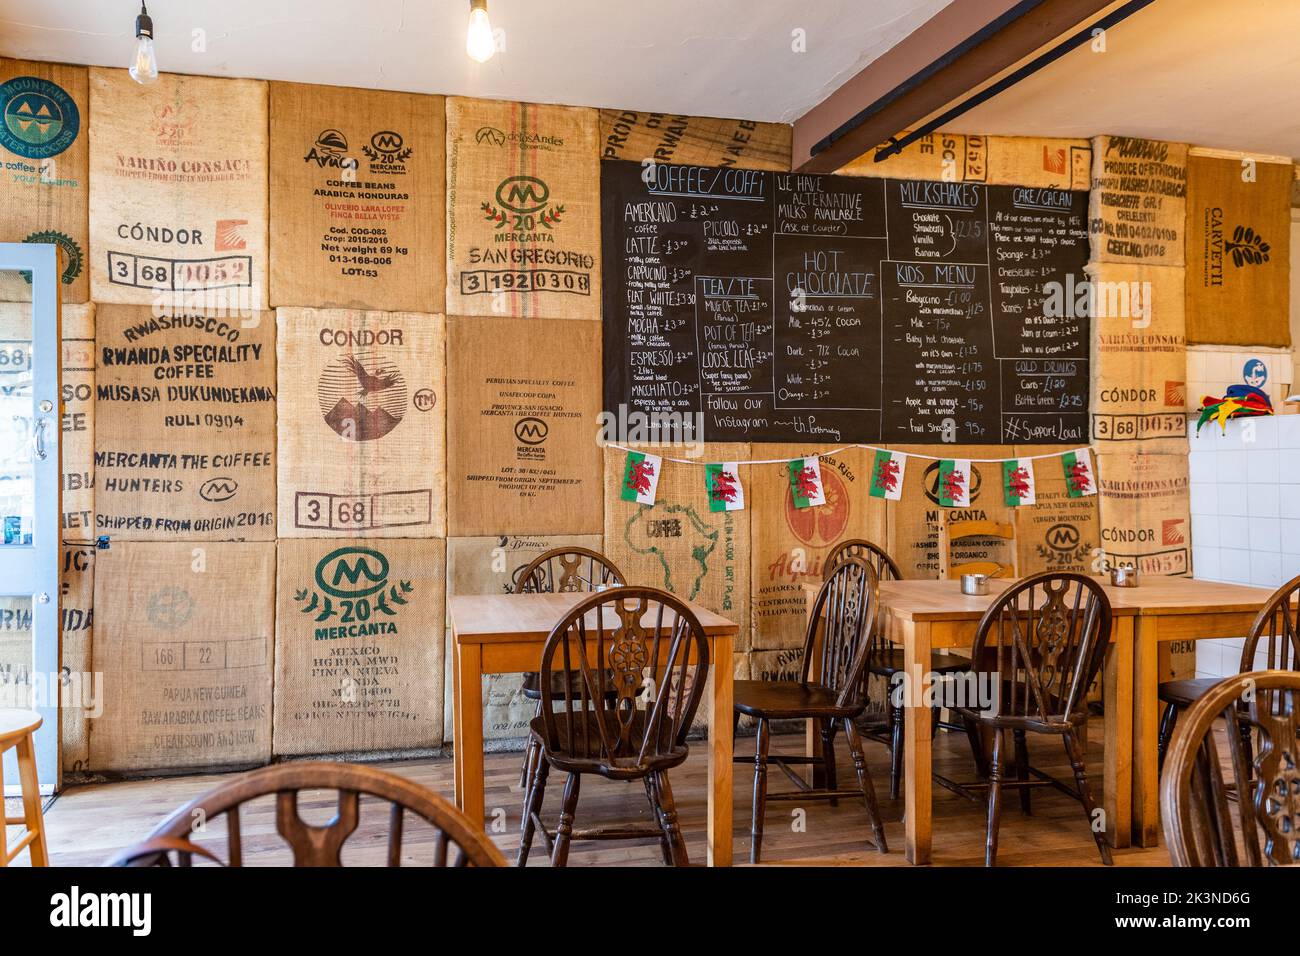 Coffee Shop in Porthmadog, North Wales, UK. Stock Photo